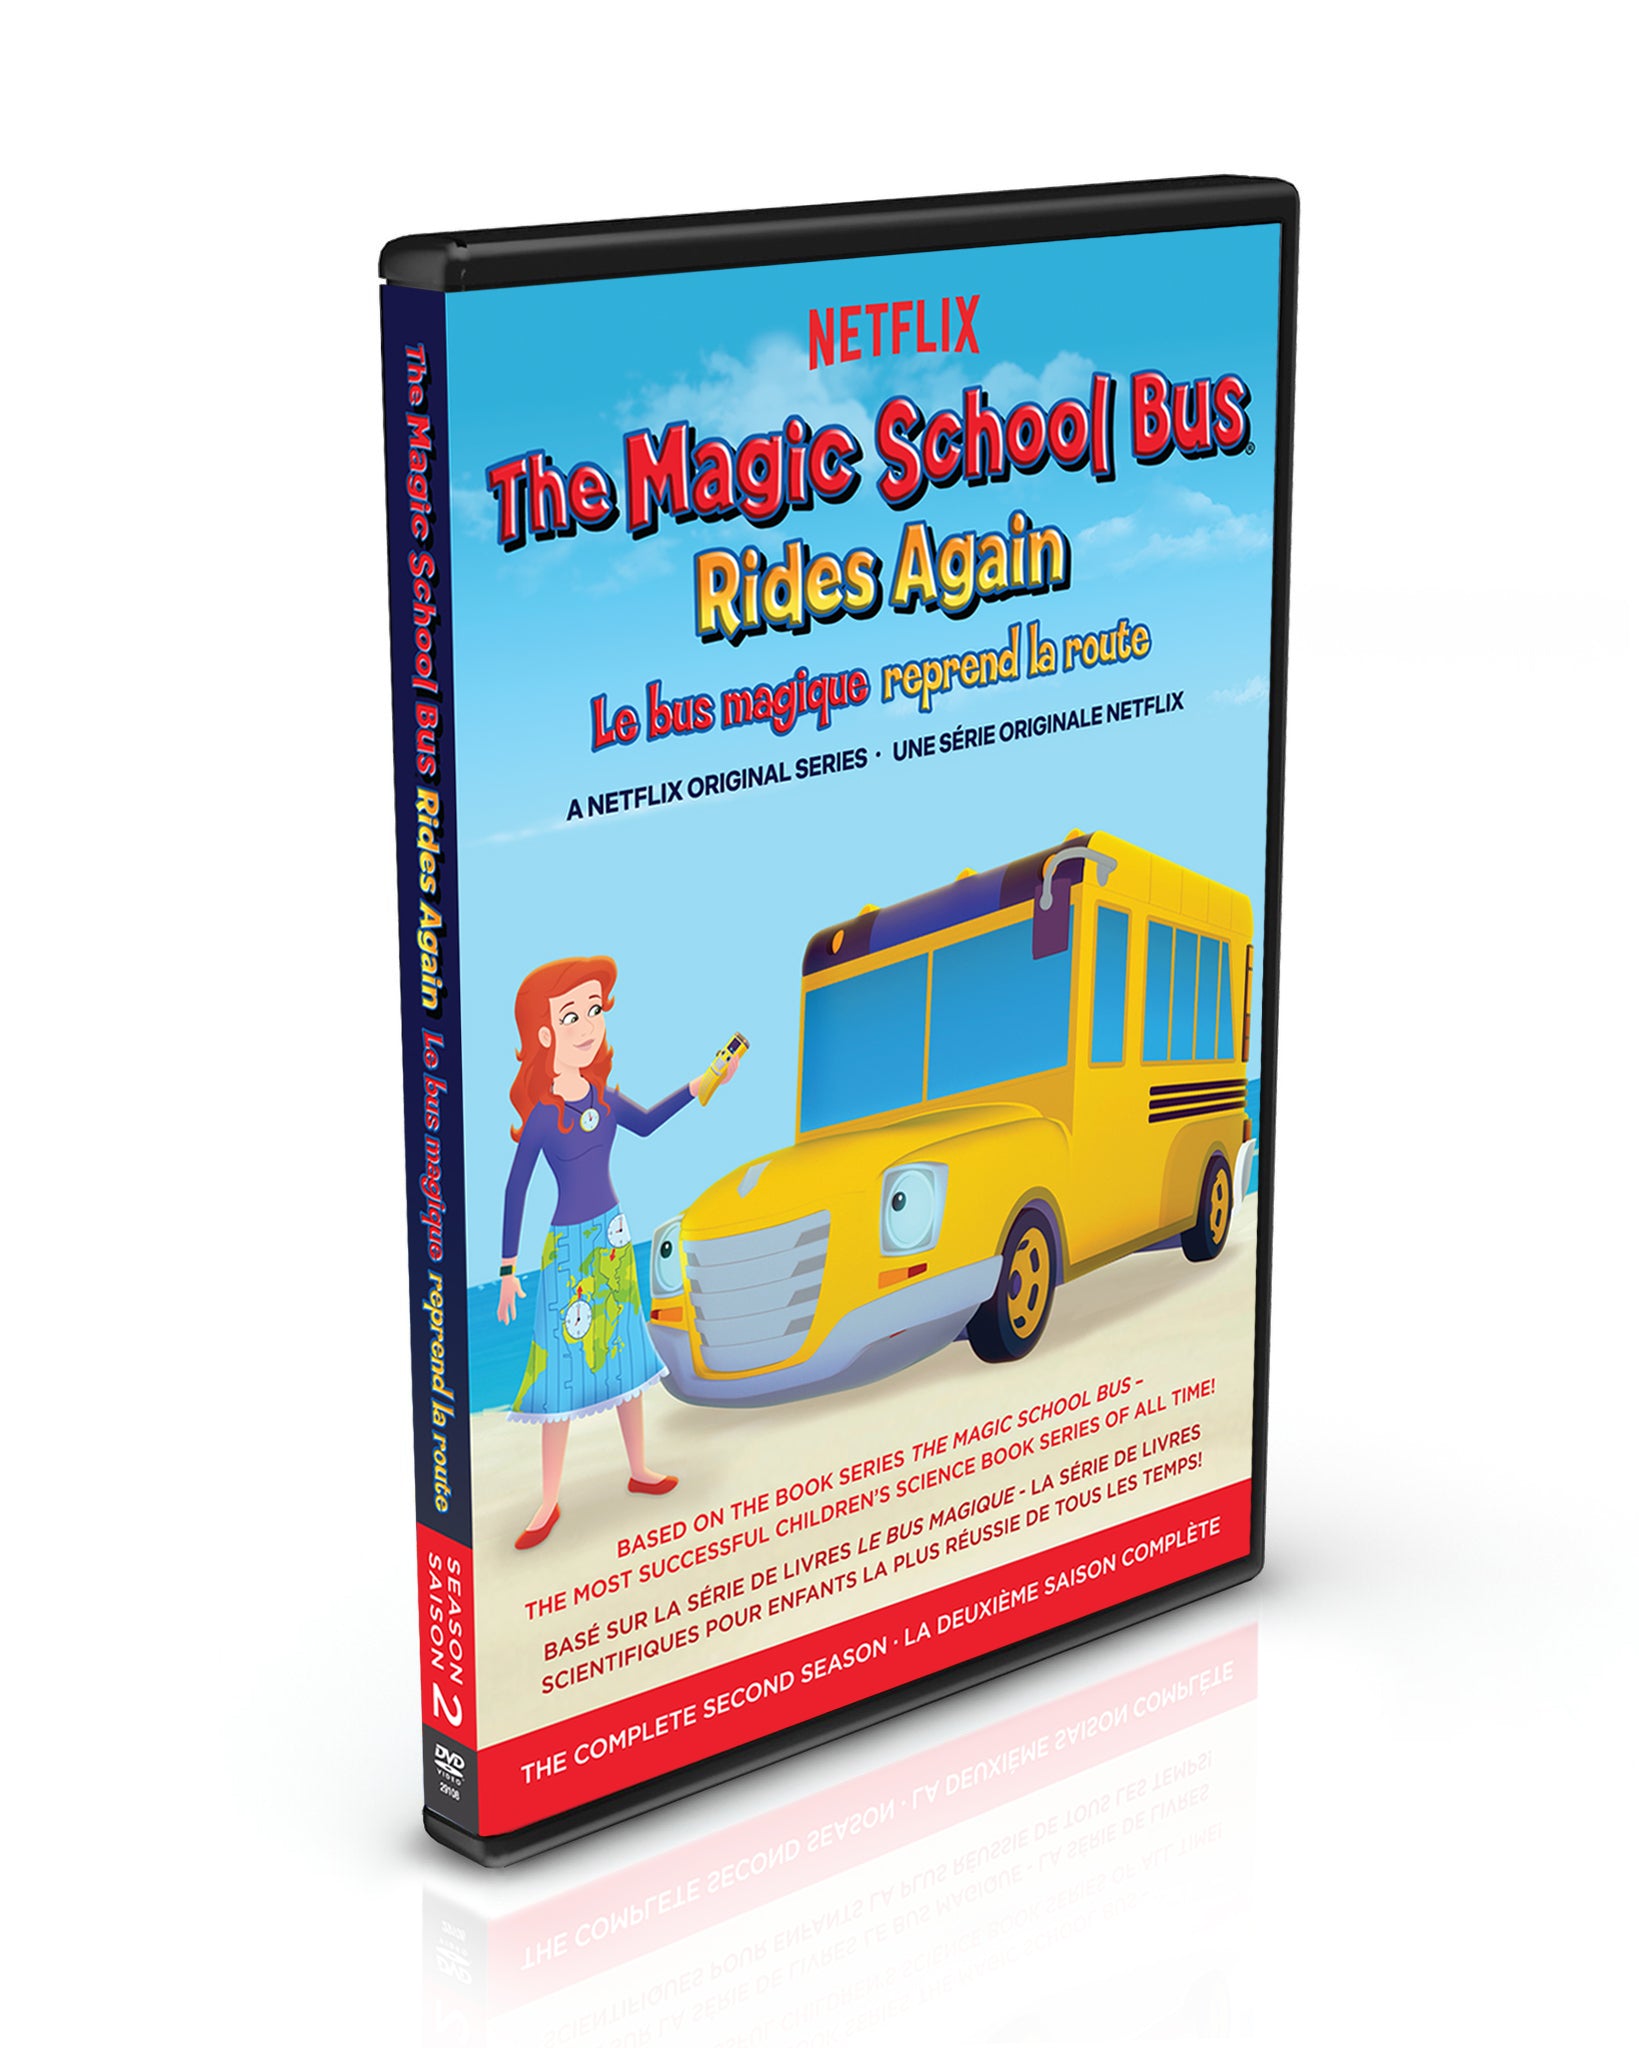 The Magic School Bus Rides Again: The Complete 2nd Season